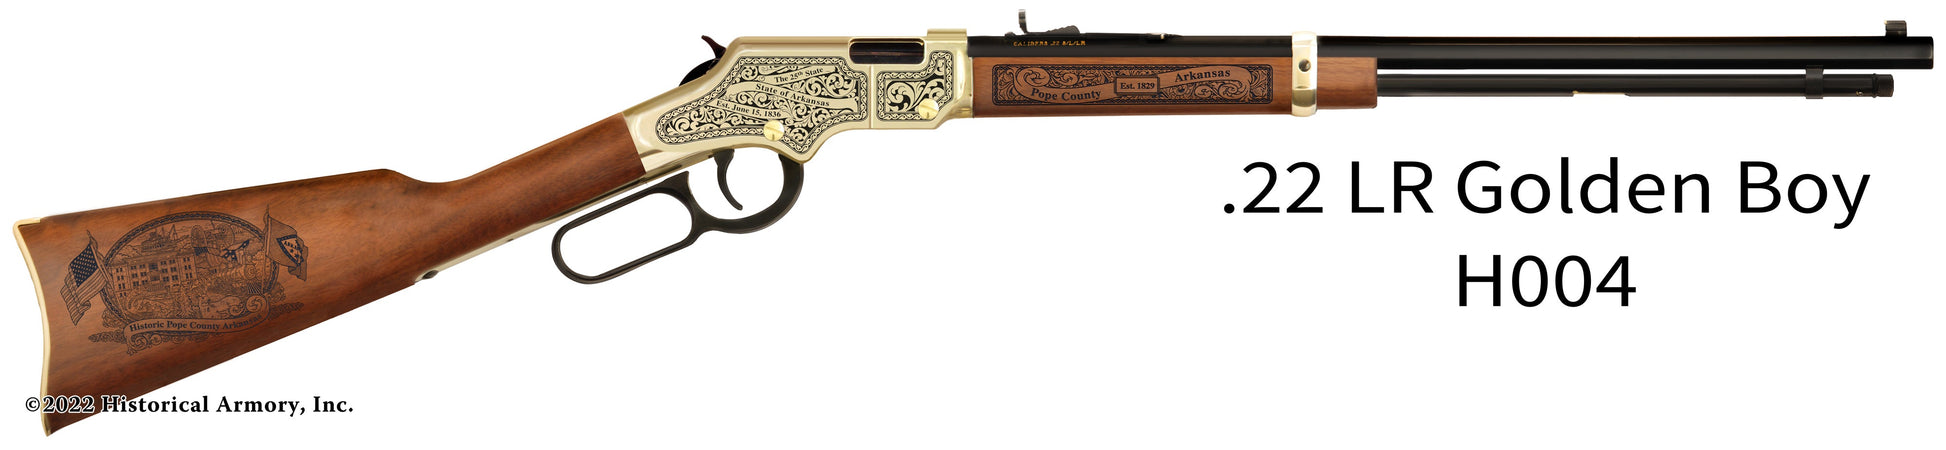 Pope County Arkansas Engraved Henry Golden Boy Rifle